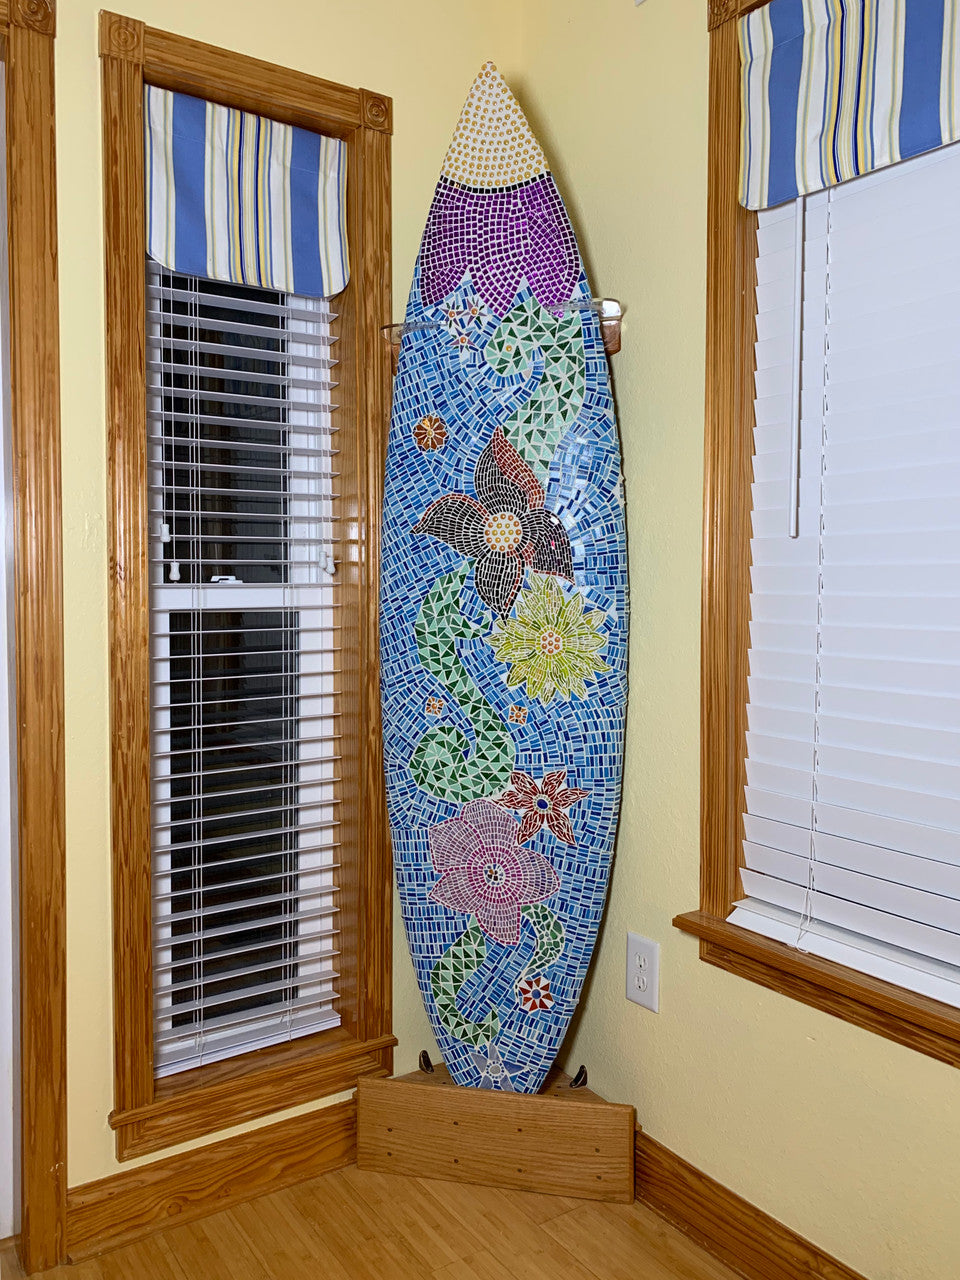 tiled surfboard wall art mount